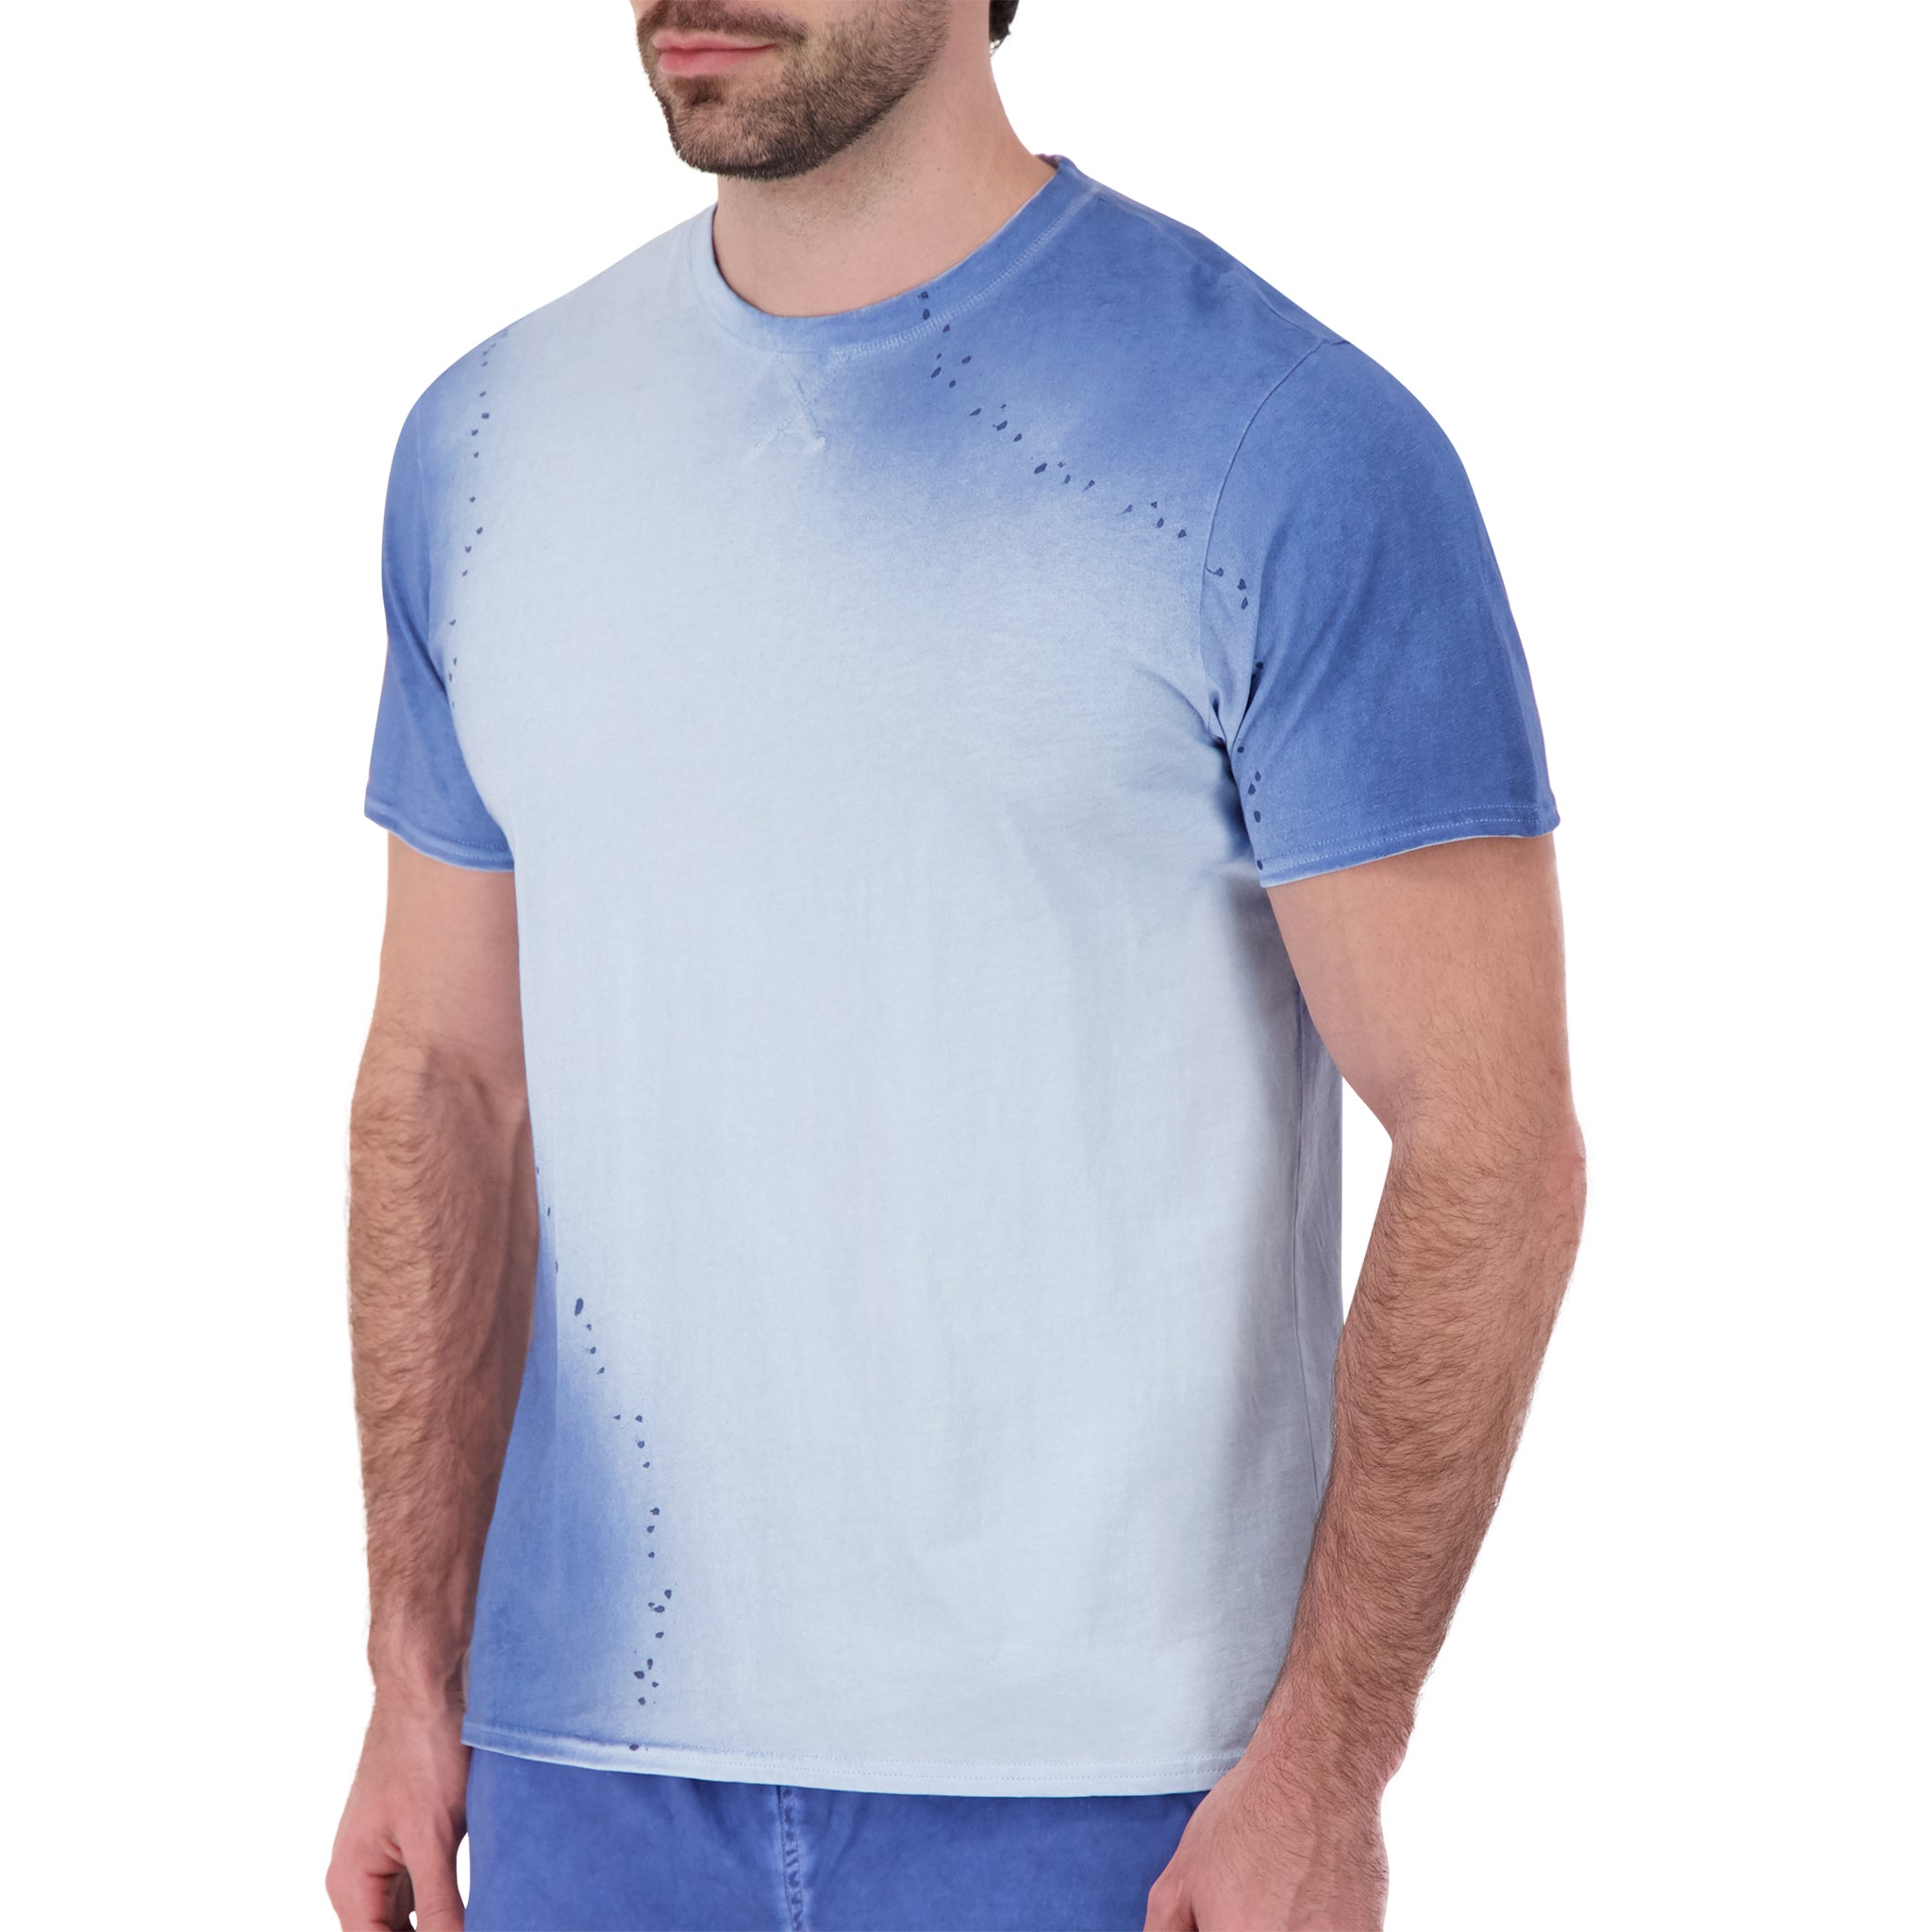 Splatter & Spray T-Shirt in Light Blue